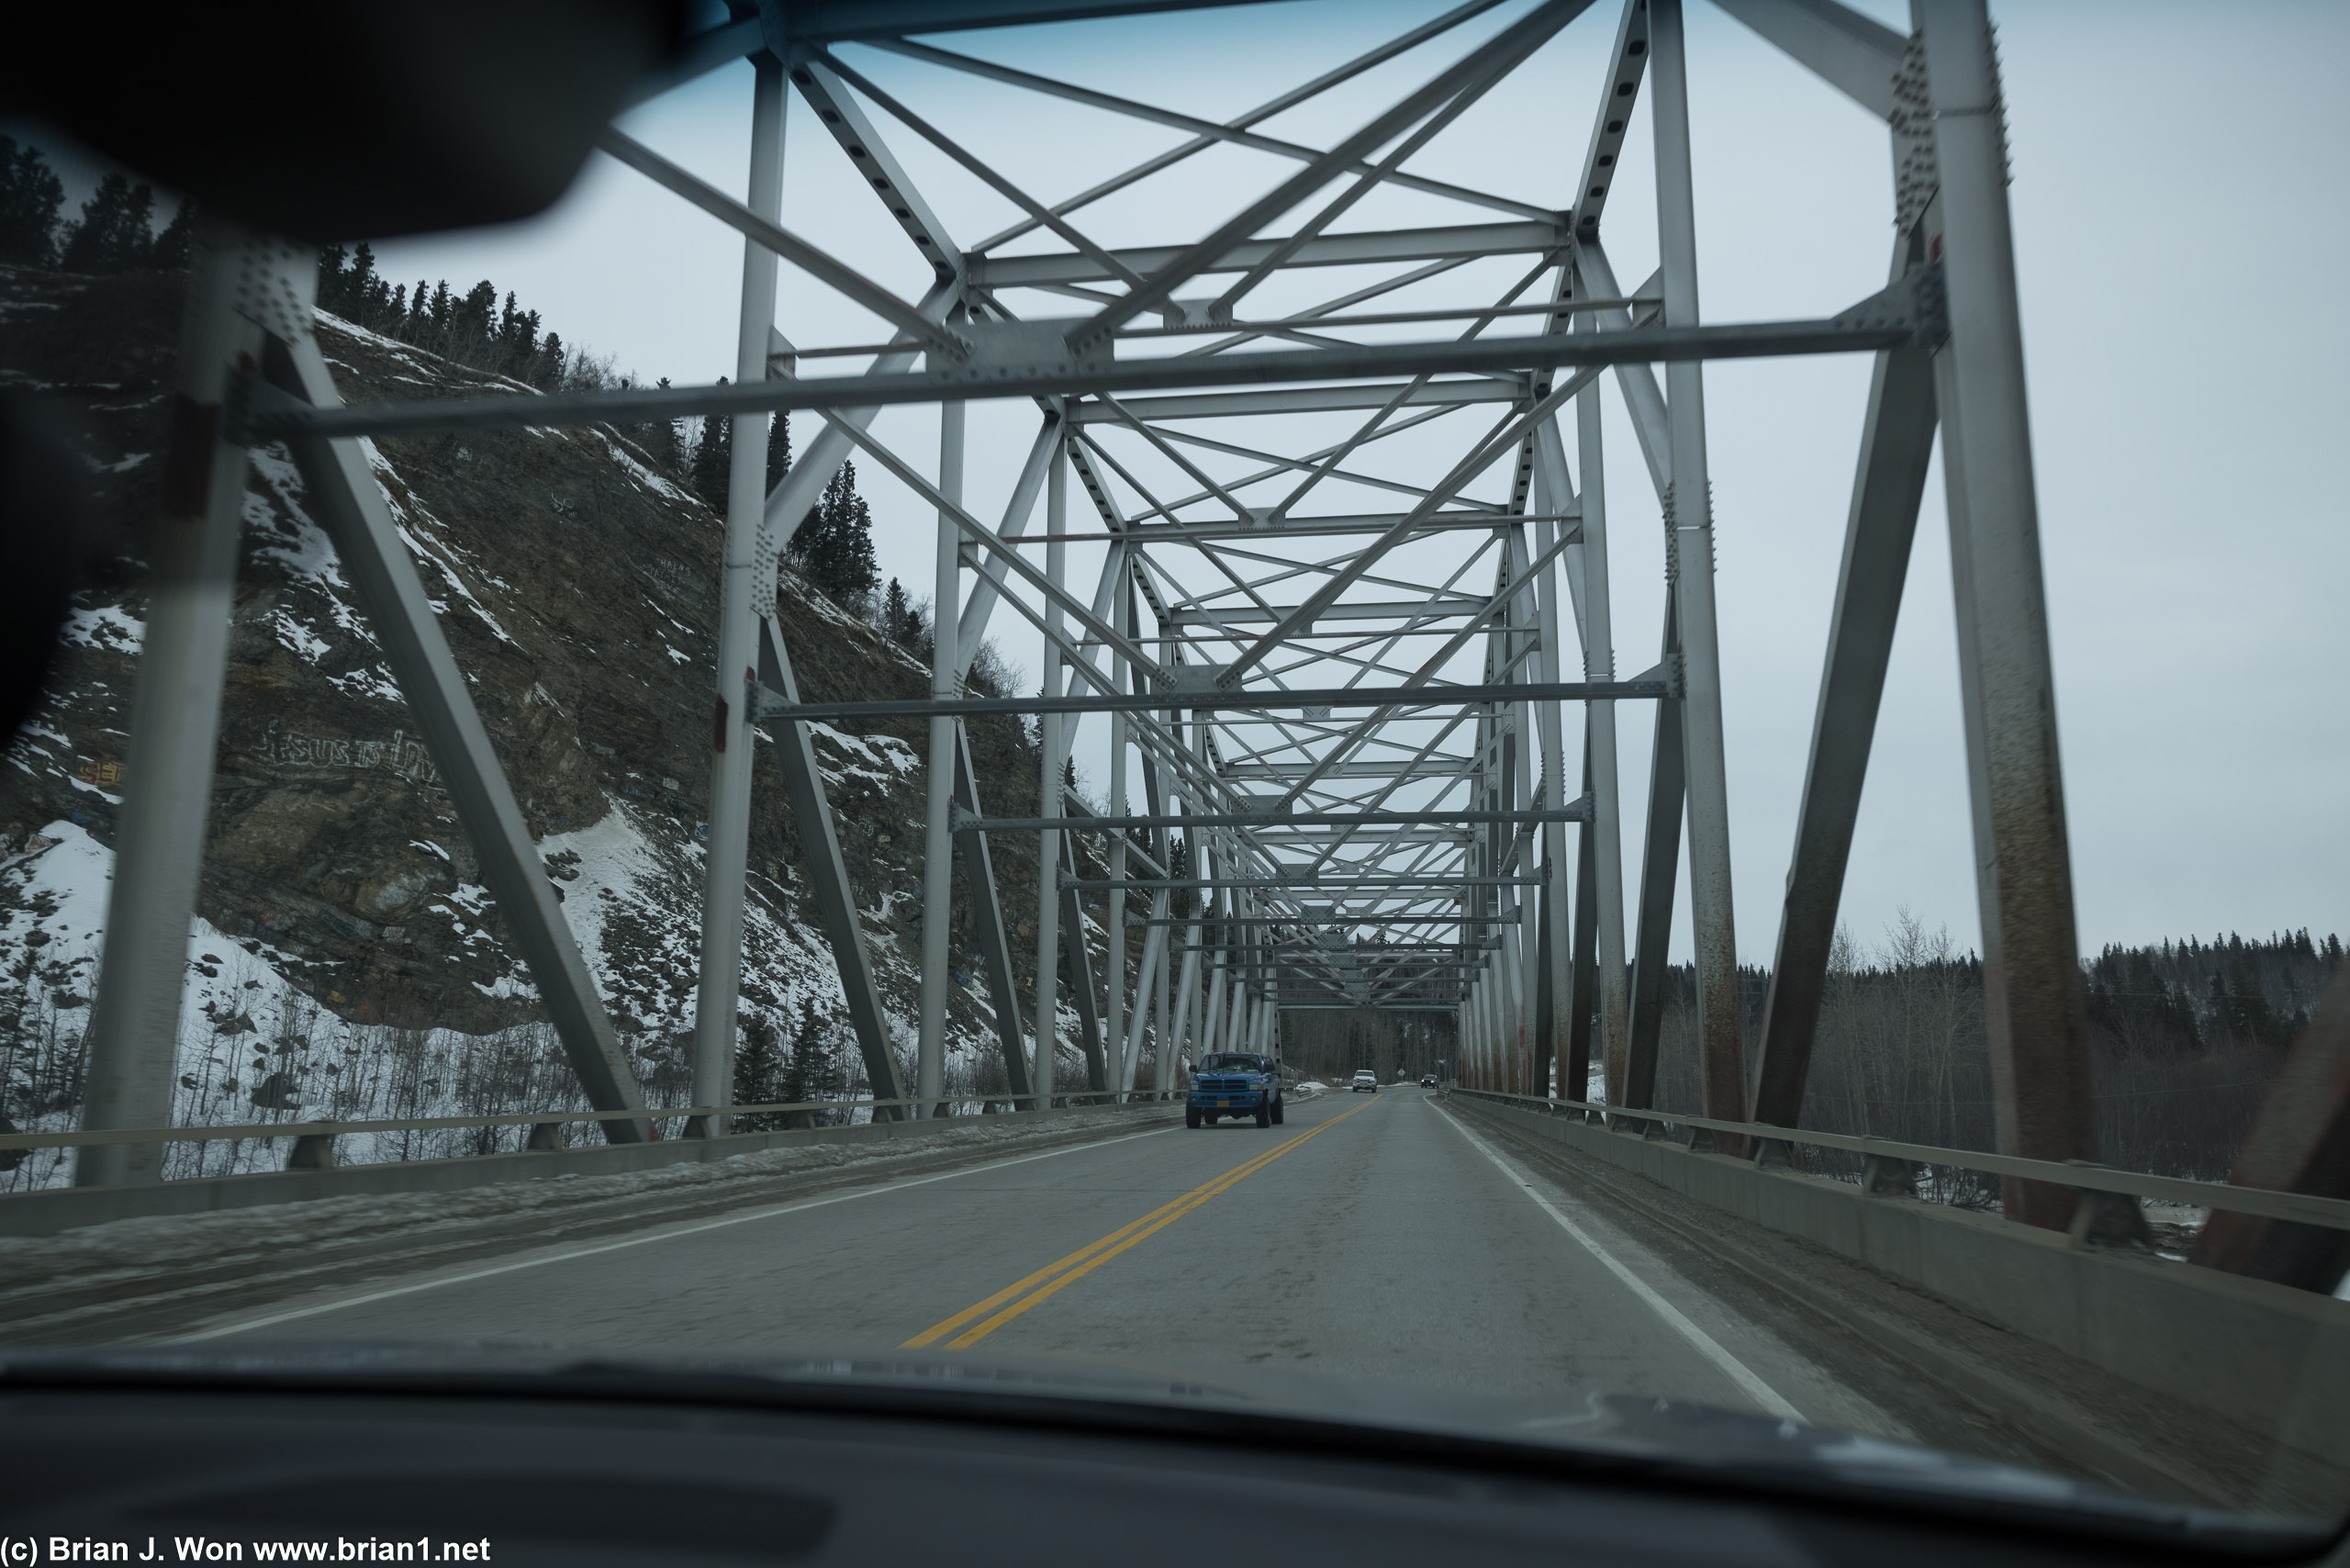 And the highway bridge.